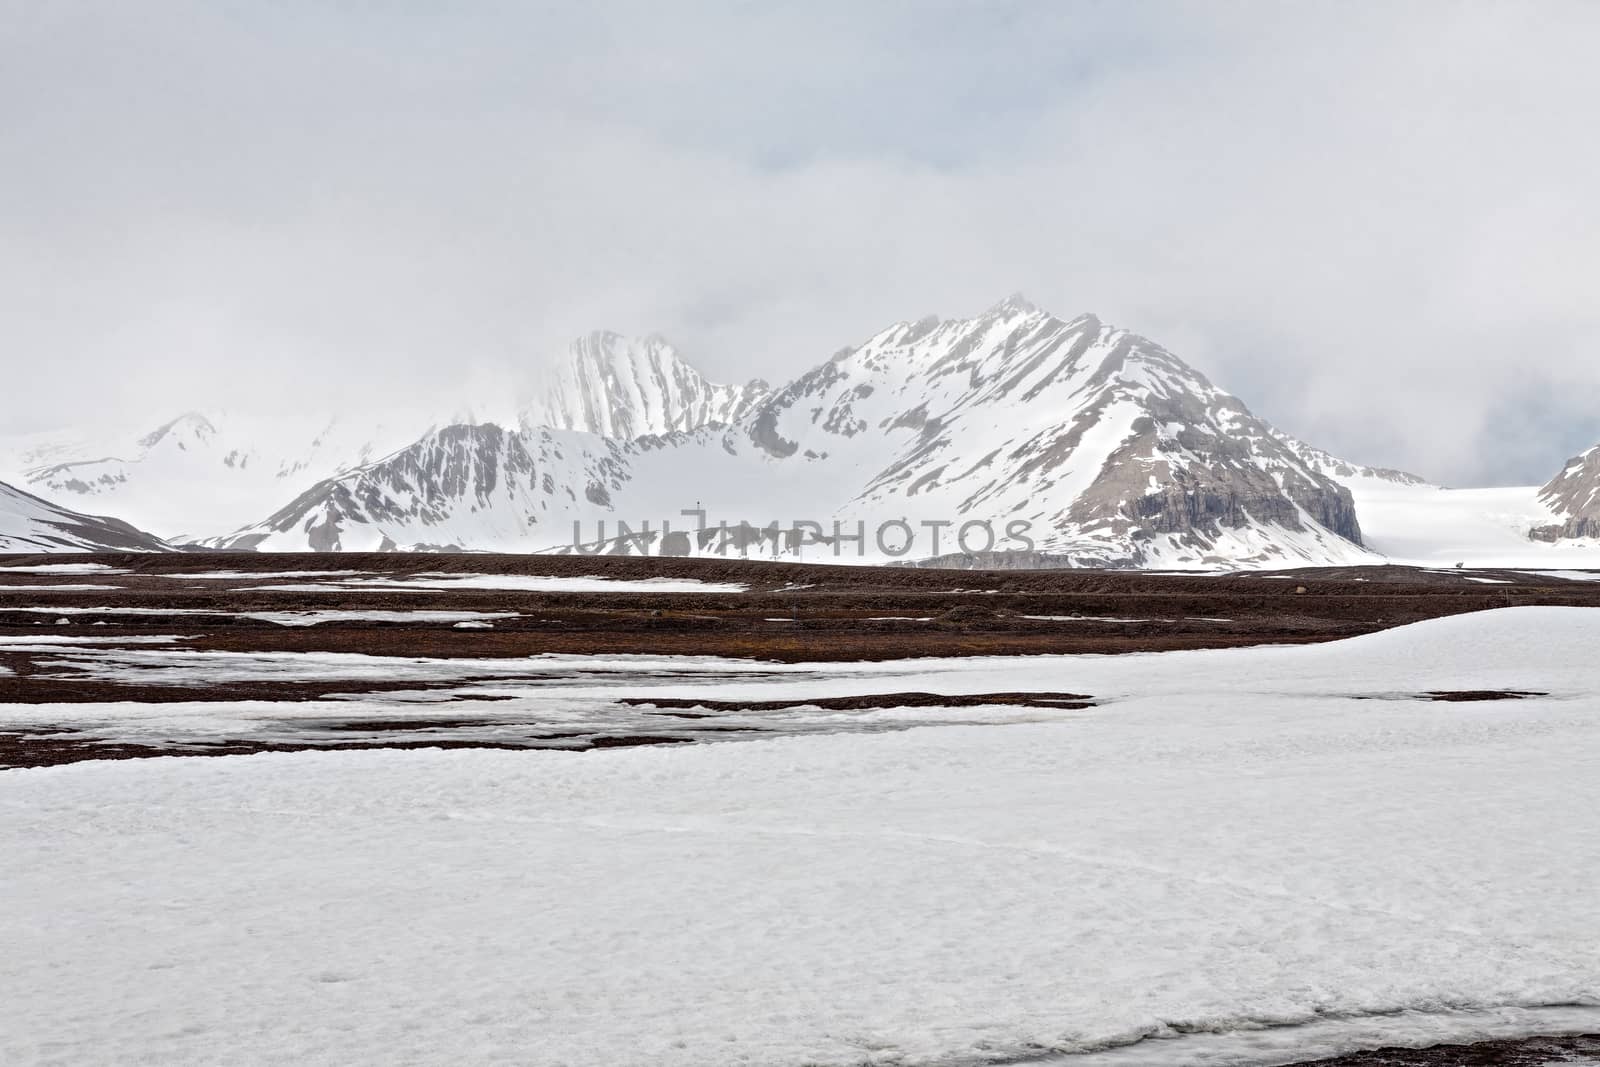 Snowy mountains in Ny Alesund, Svalbard islands by LuigiMorbidelli